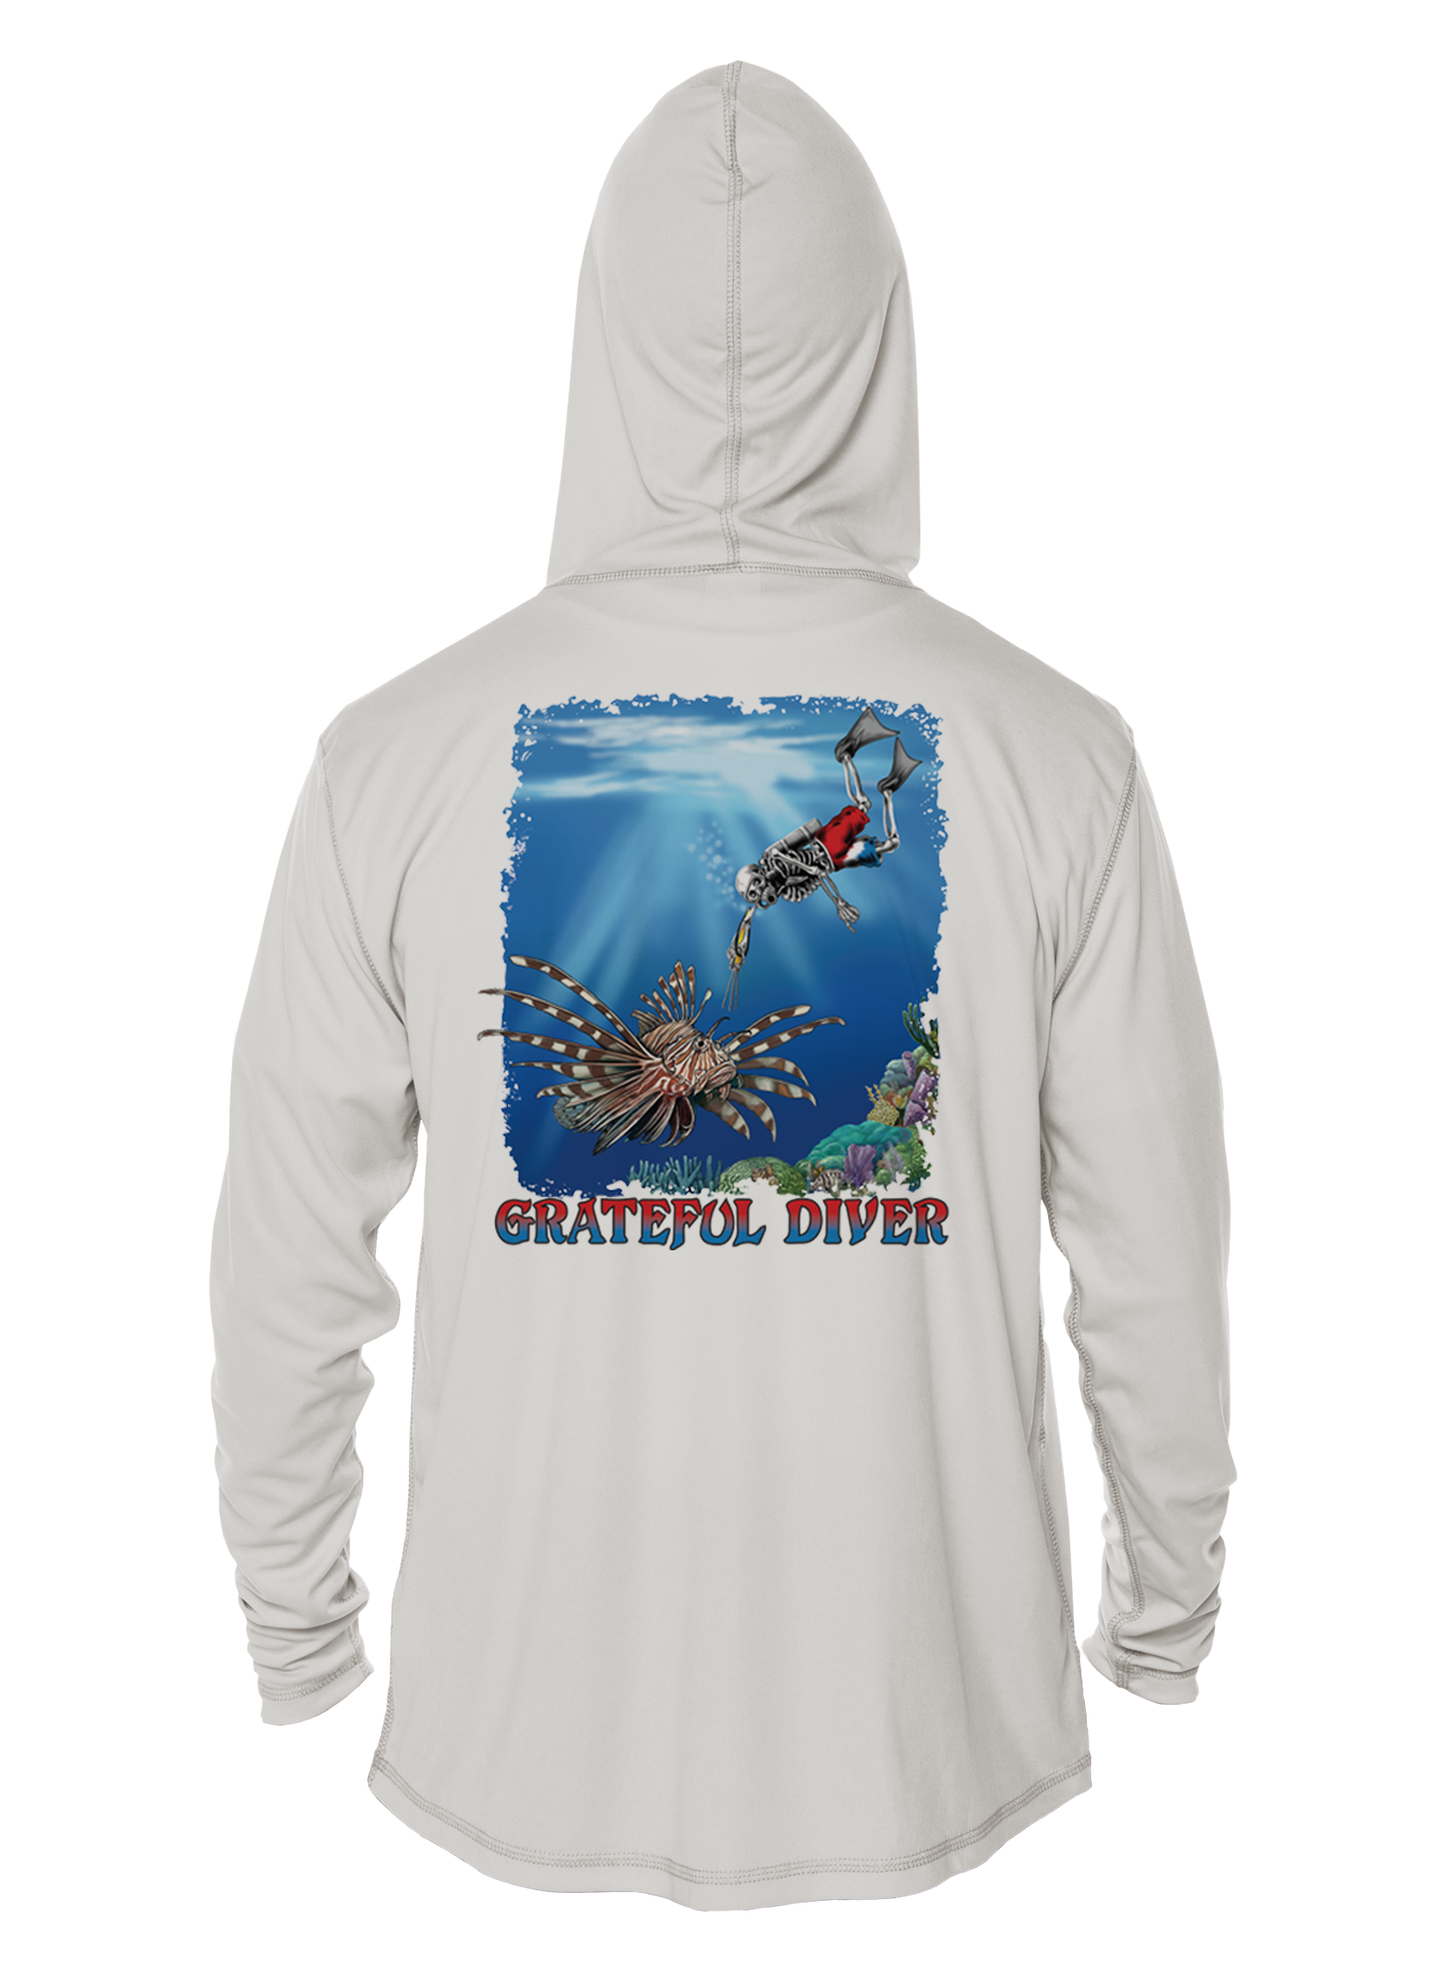 Grateful Diver Lionfish Hunter UV Hoodie